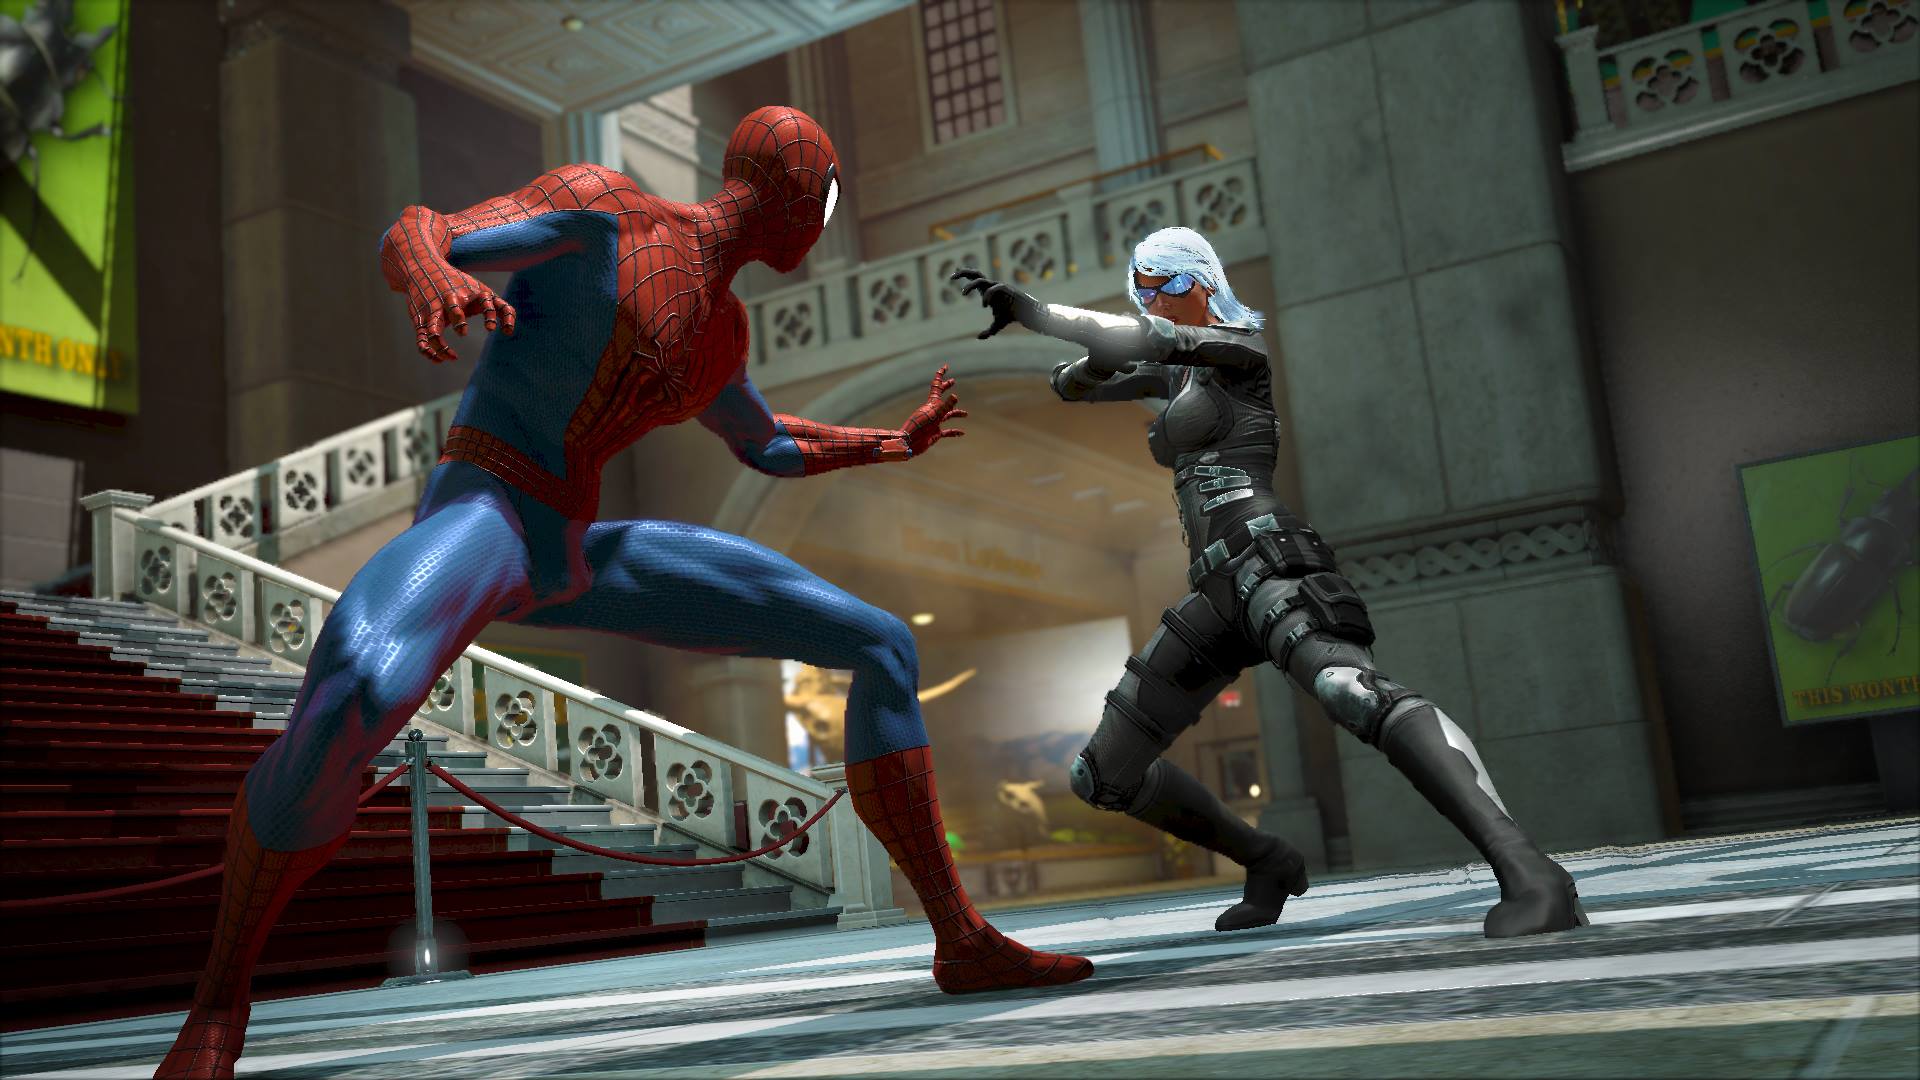 Man this game. The amazing Spider-man 2 игра. The amazing Spider-man (игра, 2012). Spider man 2014 игра. Человек паук амазинг 2 игра.